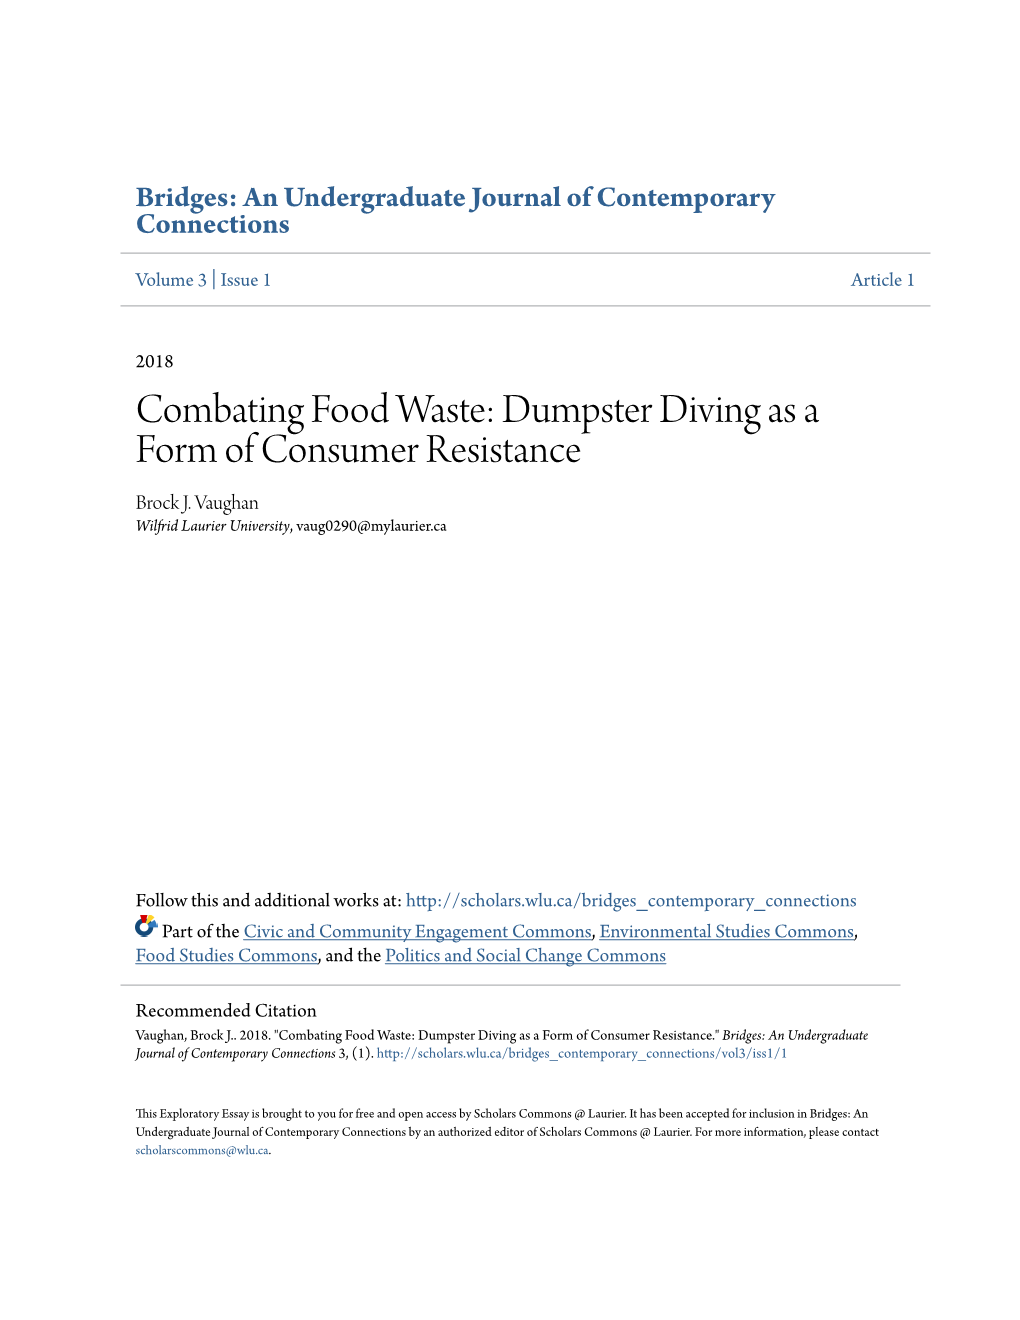 Combating Food Waste: Dumpster Diving As a Form of Consumer Resistance Brock J